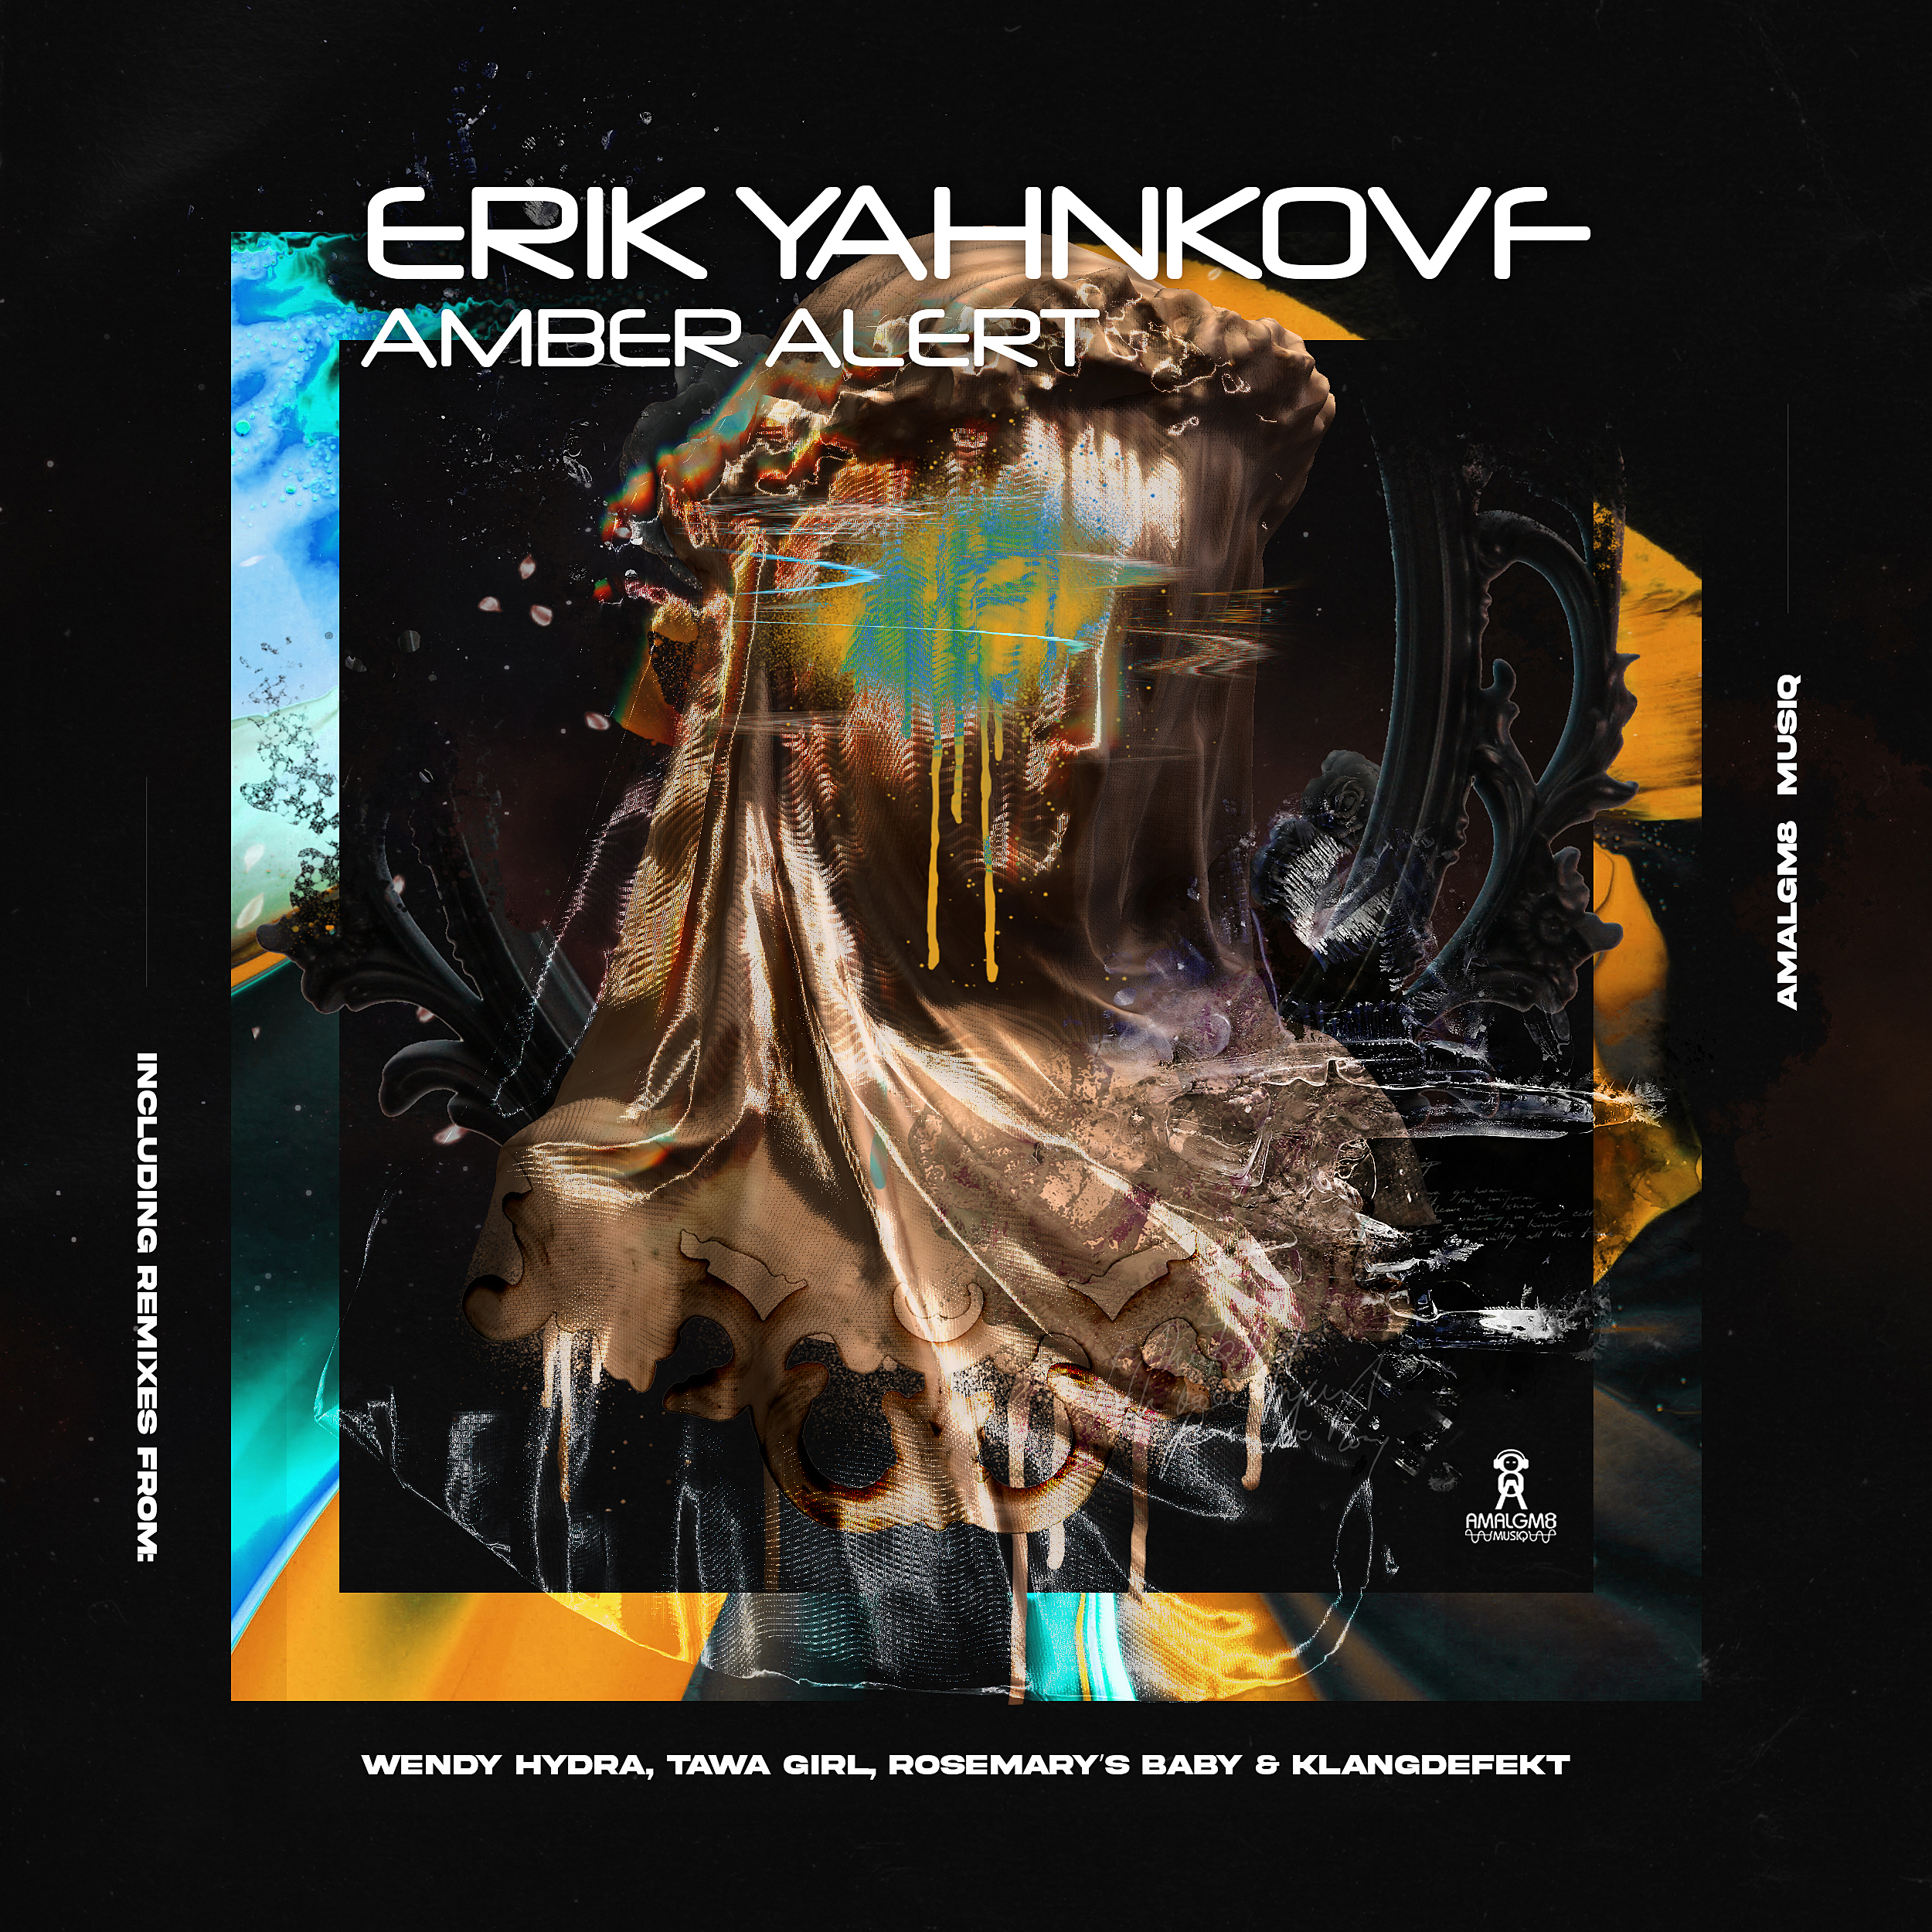 Erik Yahnkovf amber alert album art cover design